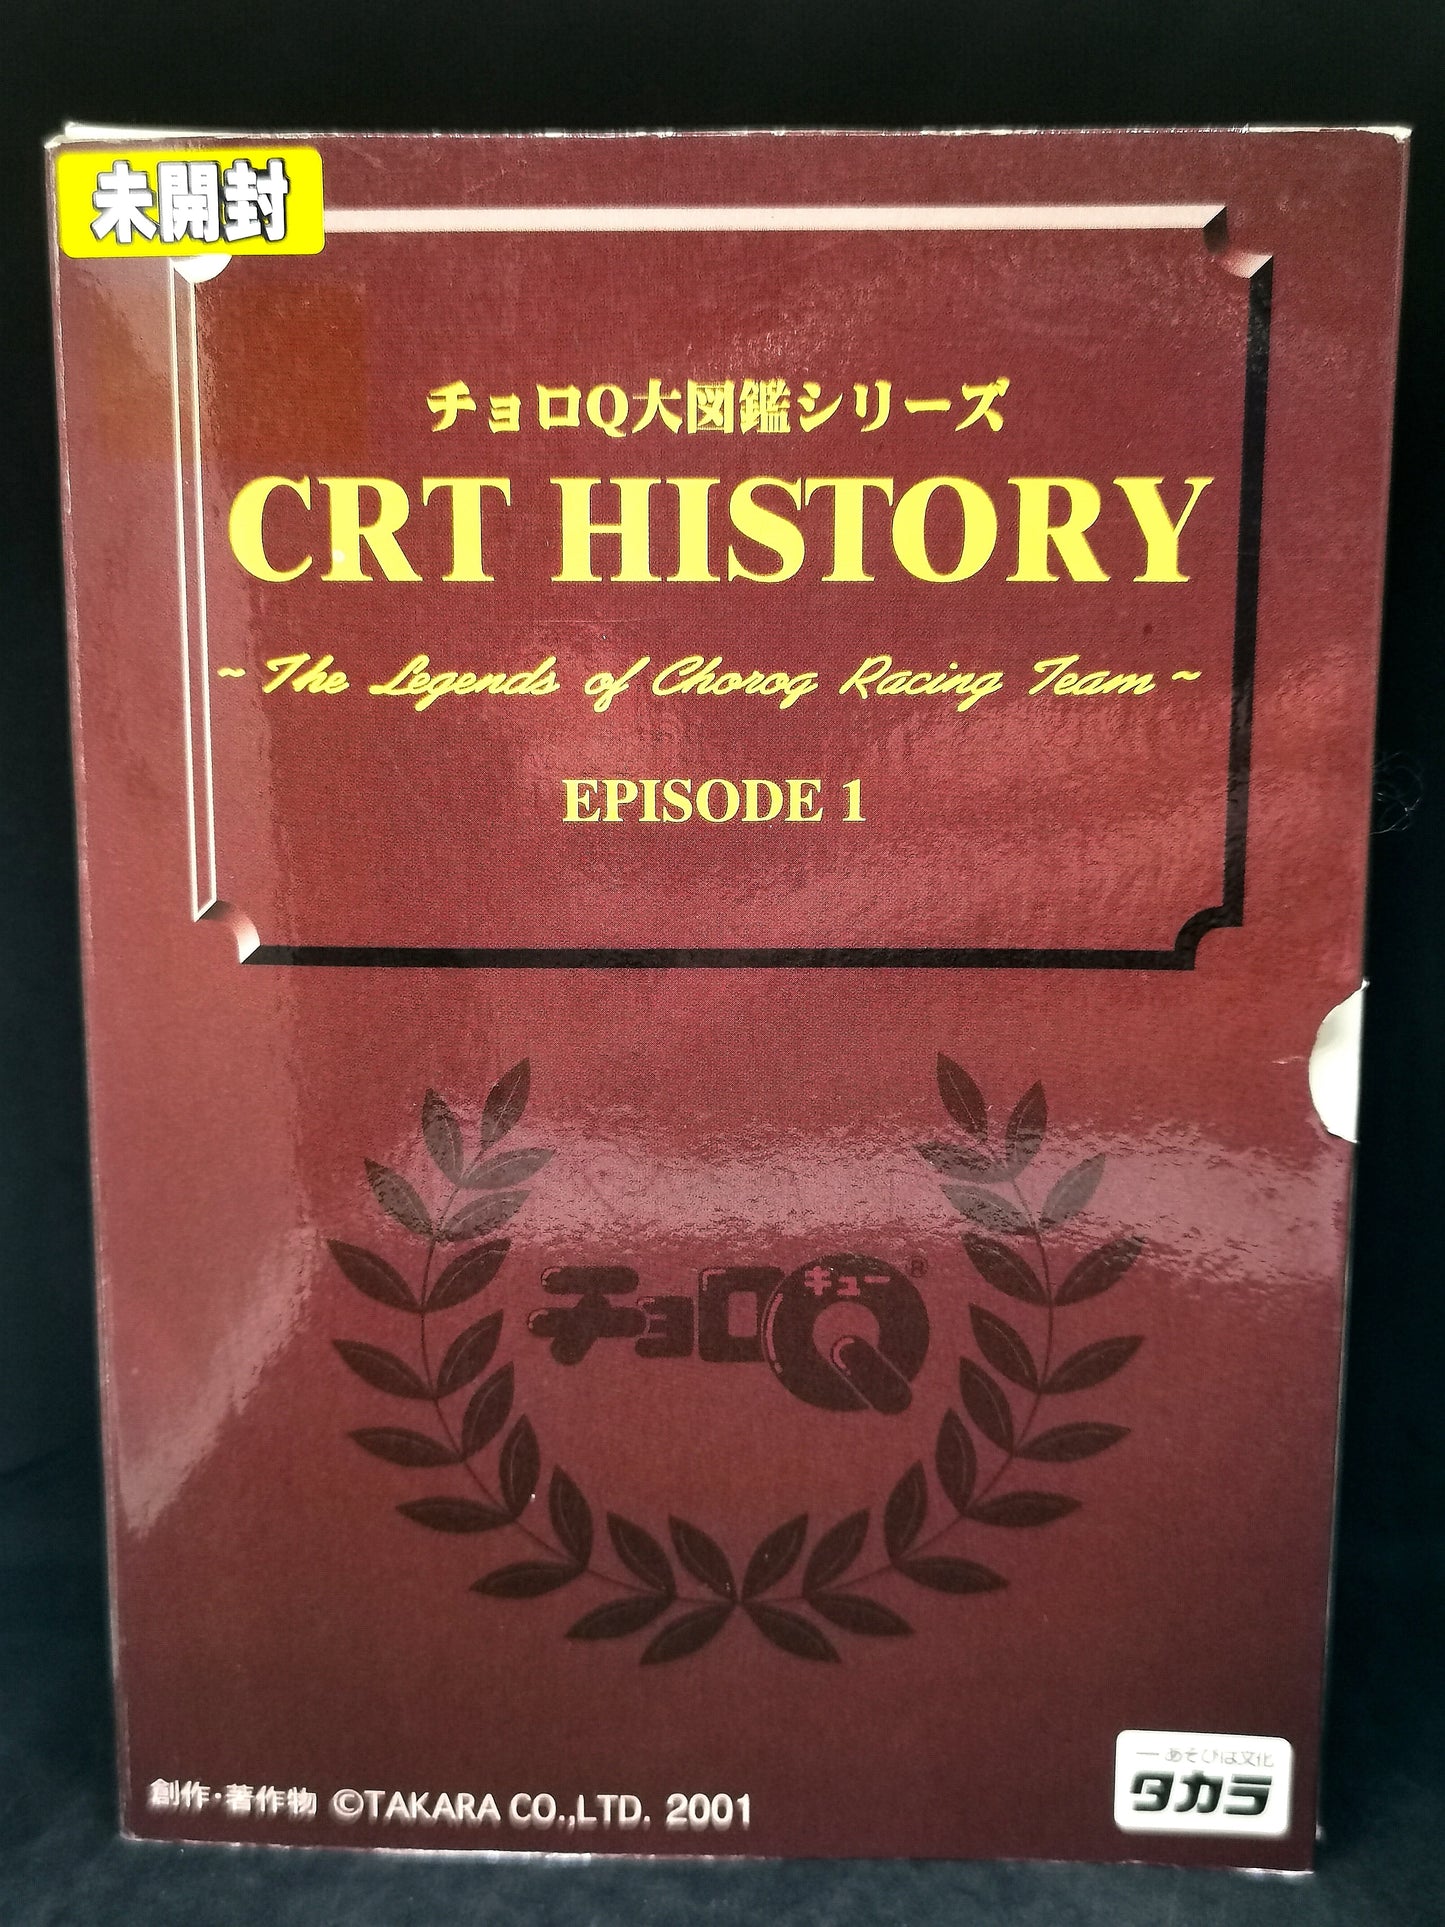 Choro Q Honda CRT History the legend of choro Q racing team